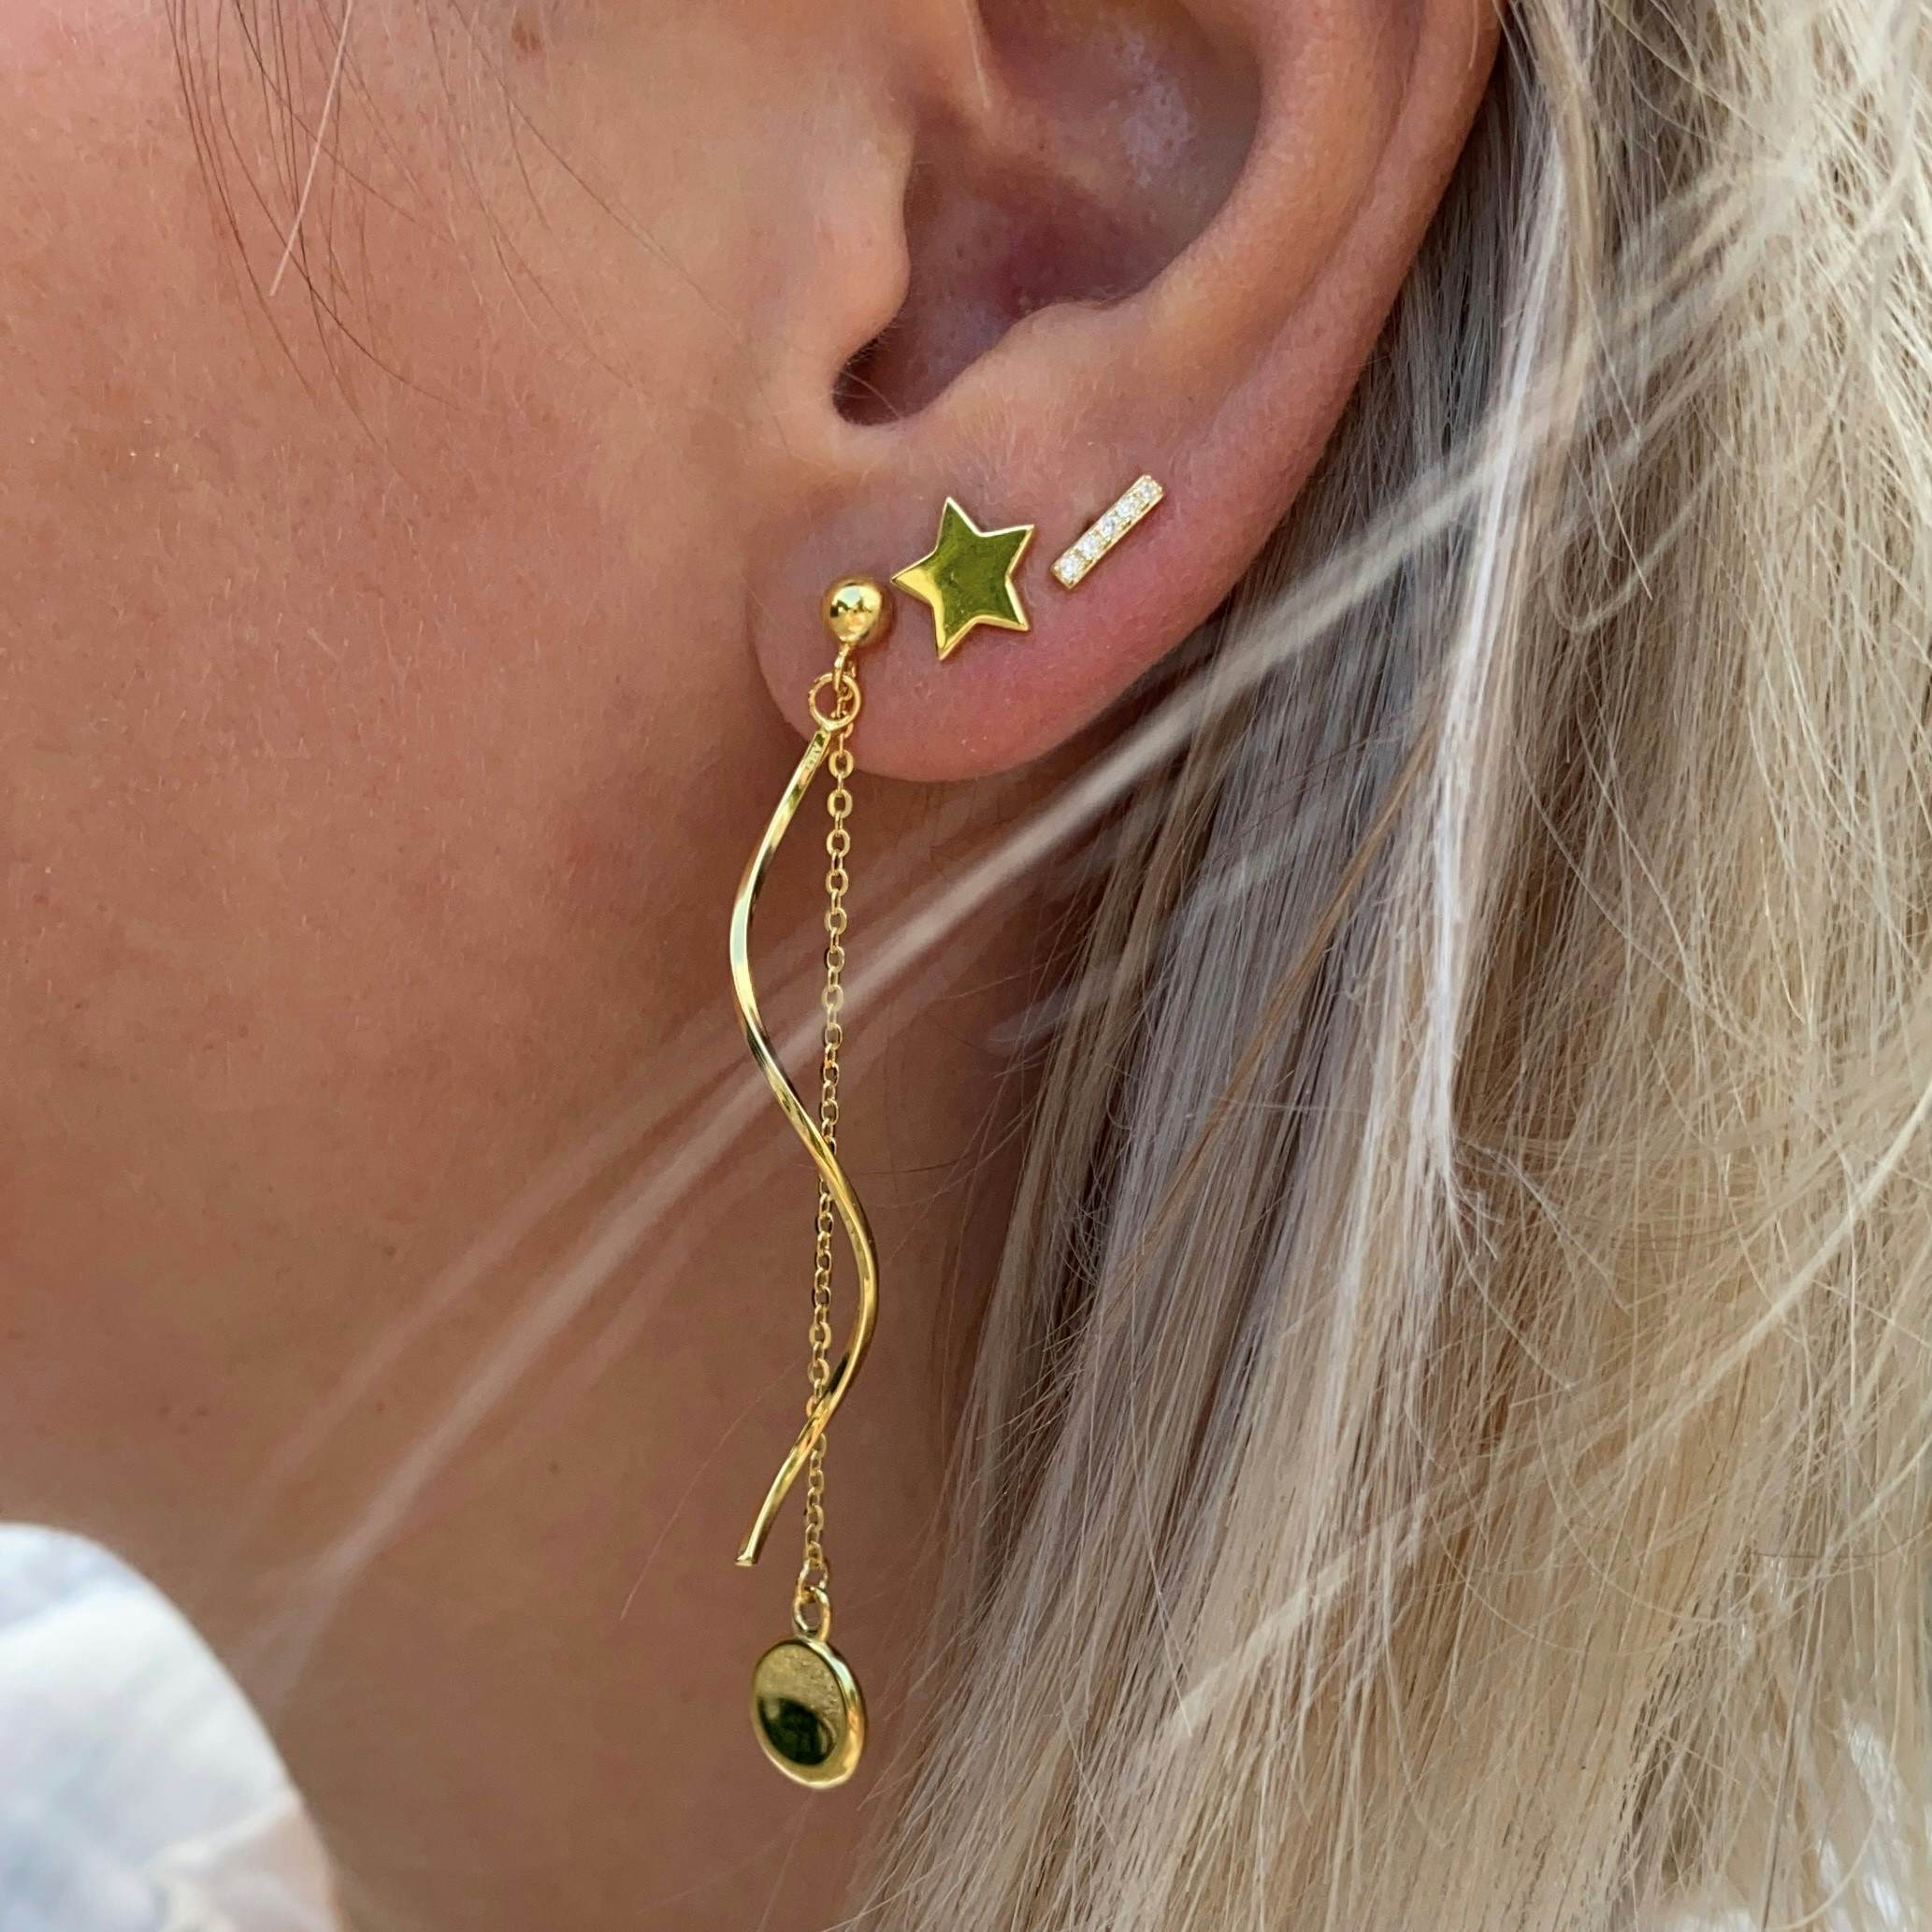 Anne earrings von A-Hjort in Vergoldet-Silber Sterling 925